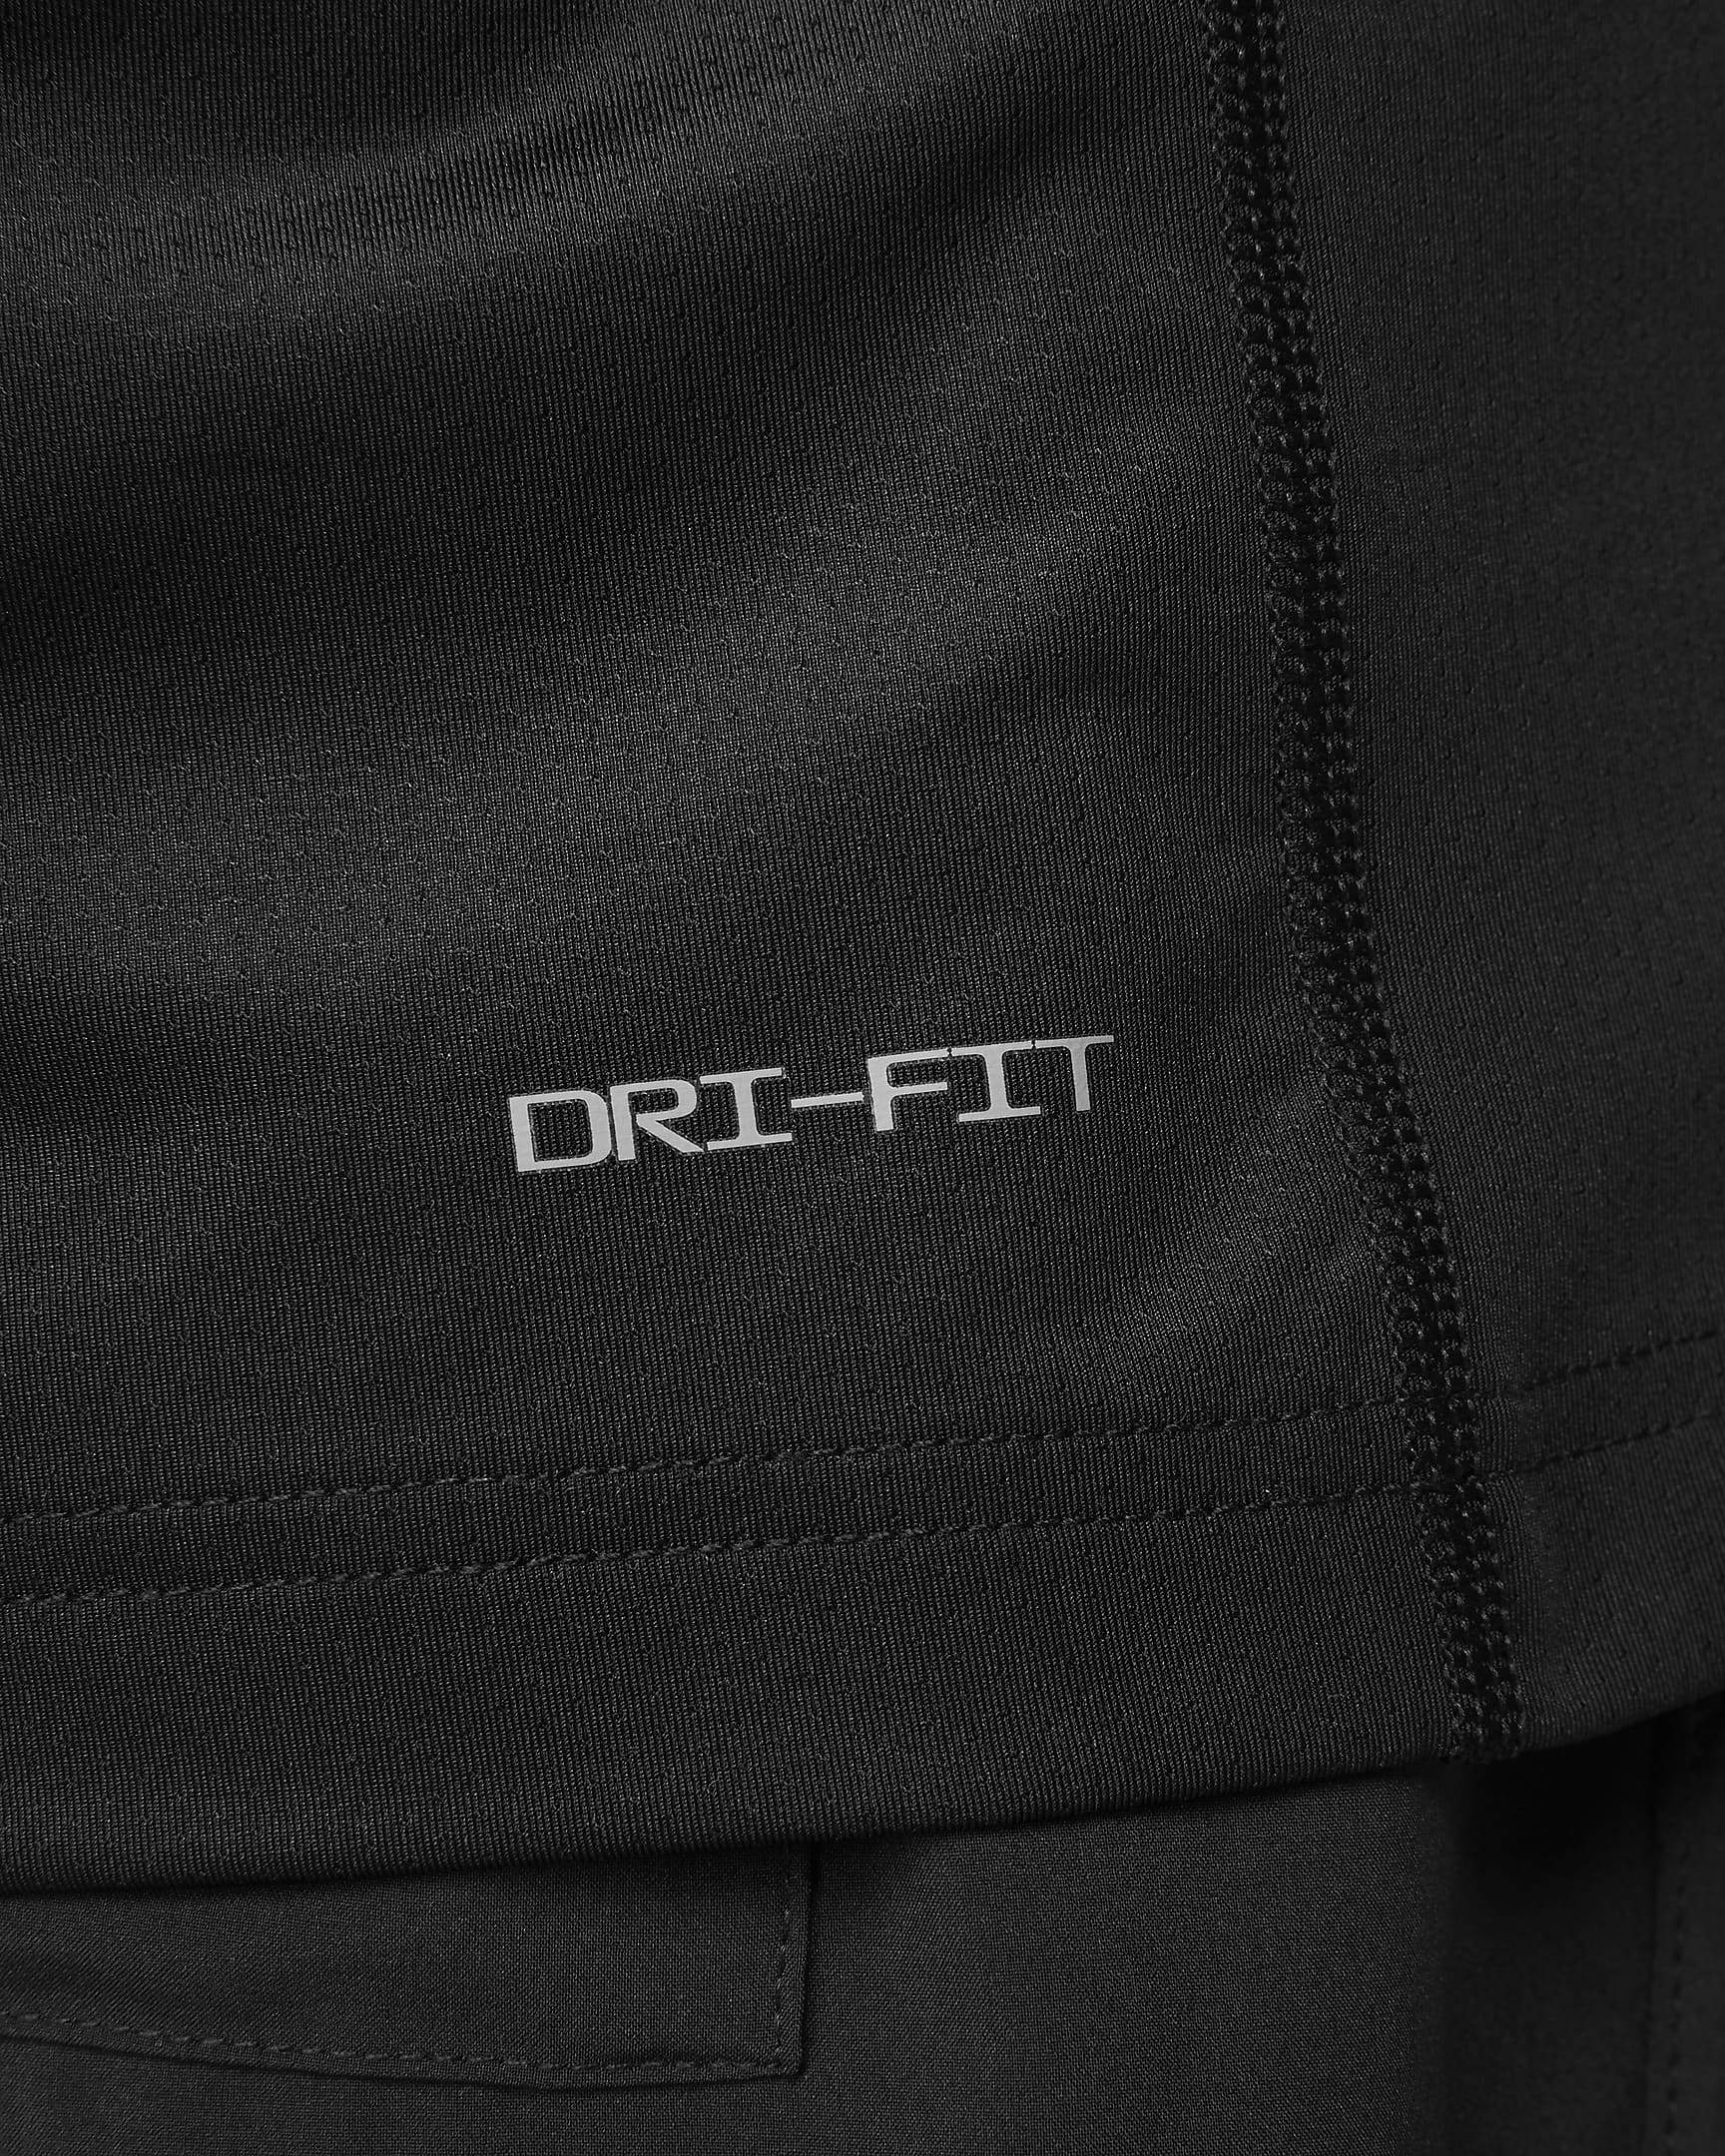 Nike Ready Men's Dri-FIT 1/4-Zip Fitness Top. Nike.com